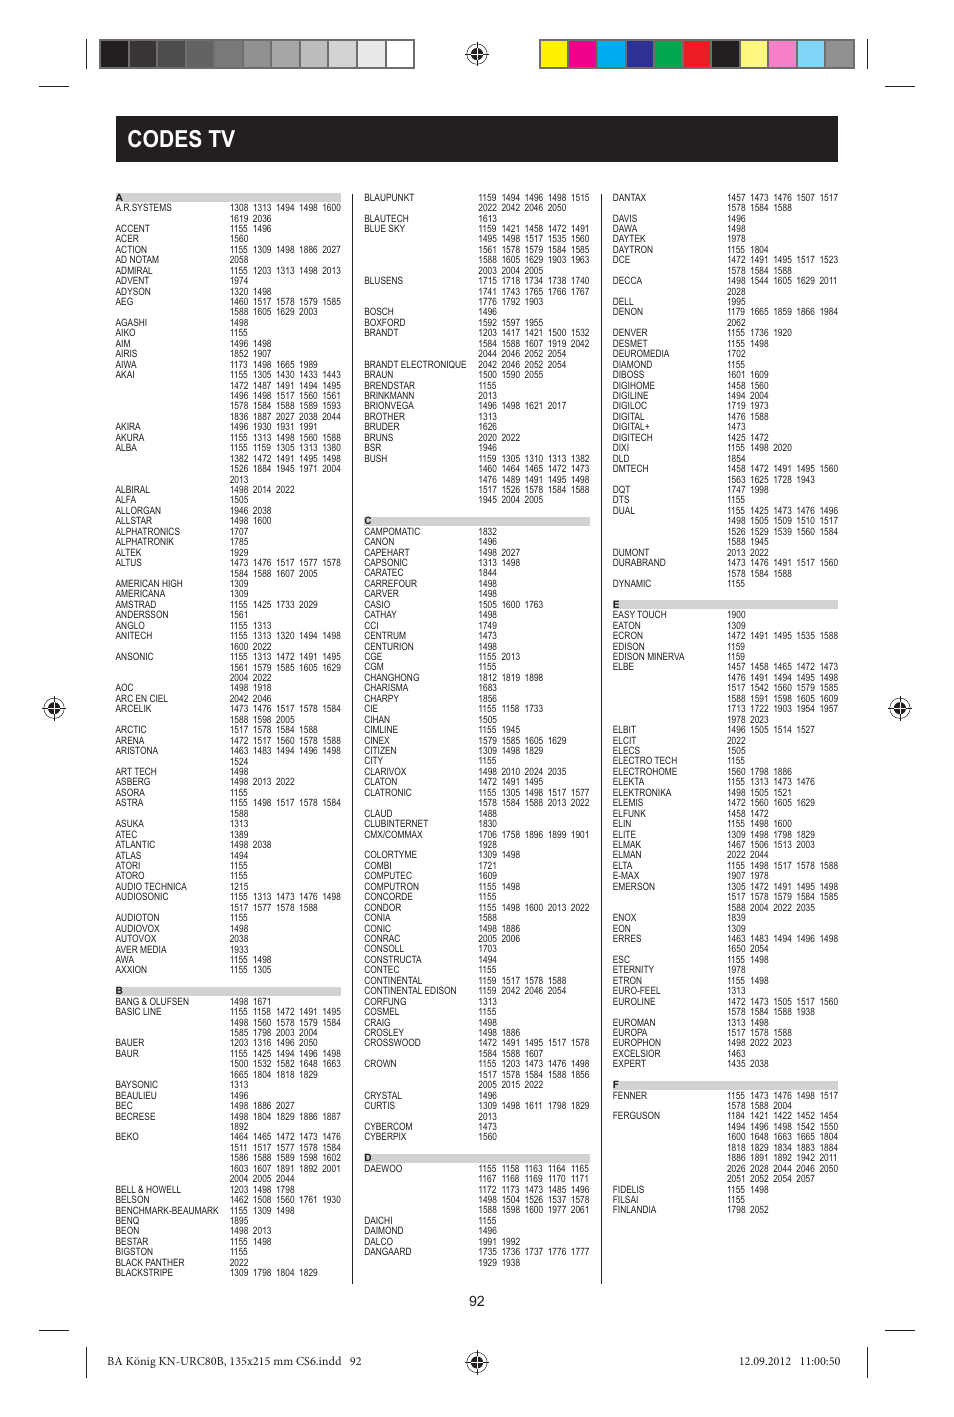 Codes tv codes | Konig Electronic 8:1 universal remote control User Manual  | Page 92 / 112 | Original mode